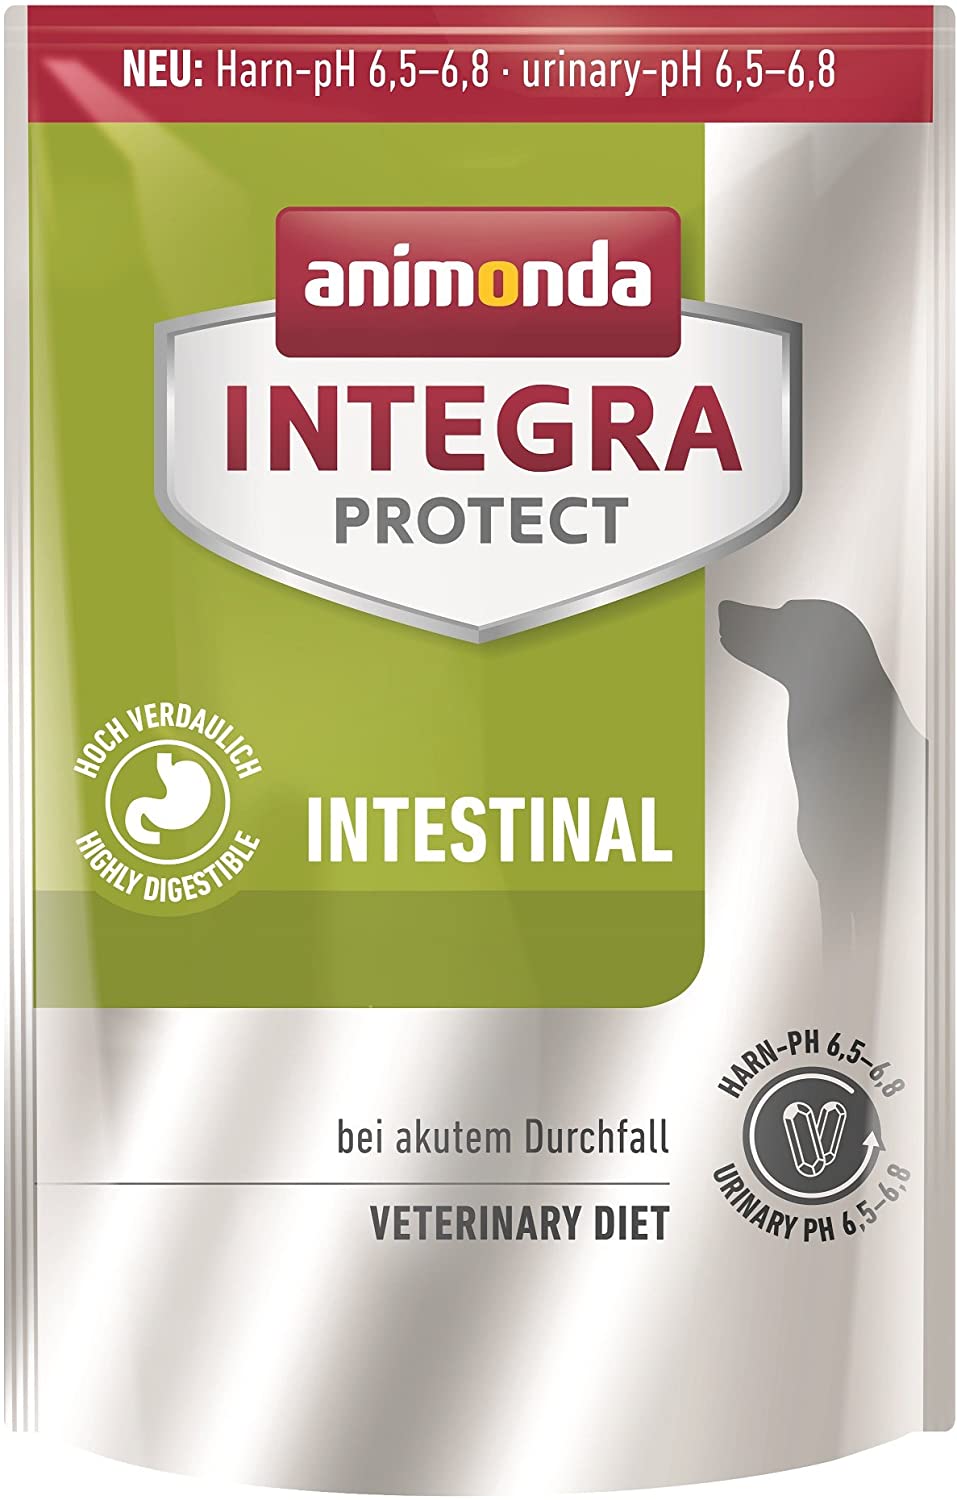  Animonda Integra Protect Intestinal trockenfutter de Perros, Dietas Perros Forro, trockenfutter en diarrea o Vómitos 